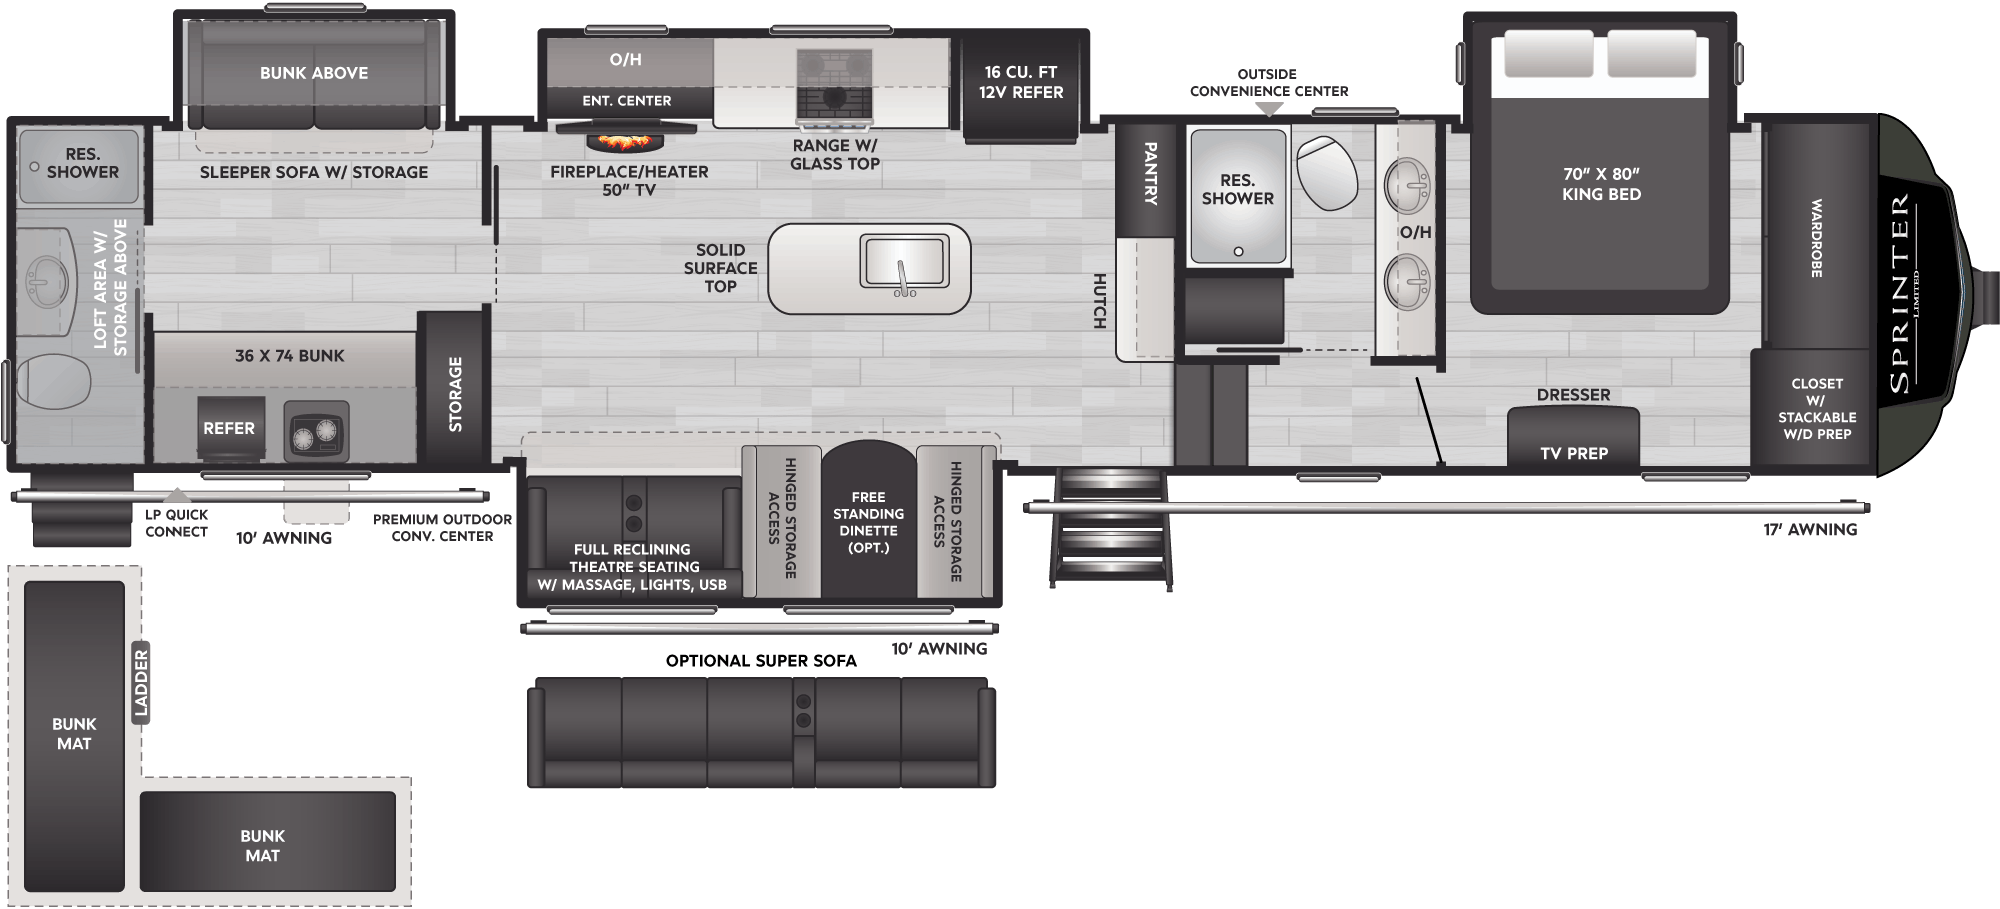 Floorplan of RV model 3900DBL